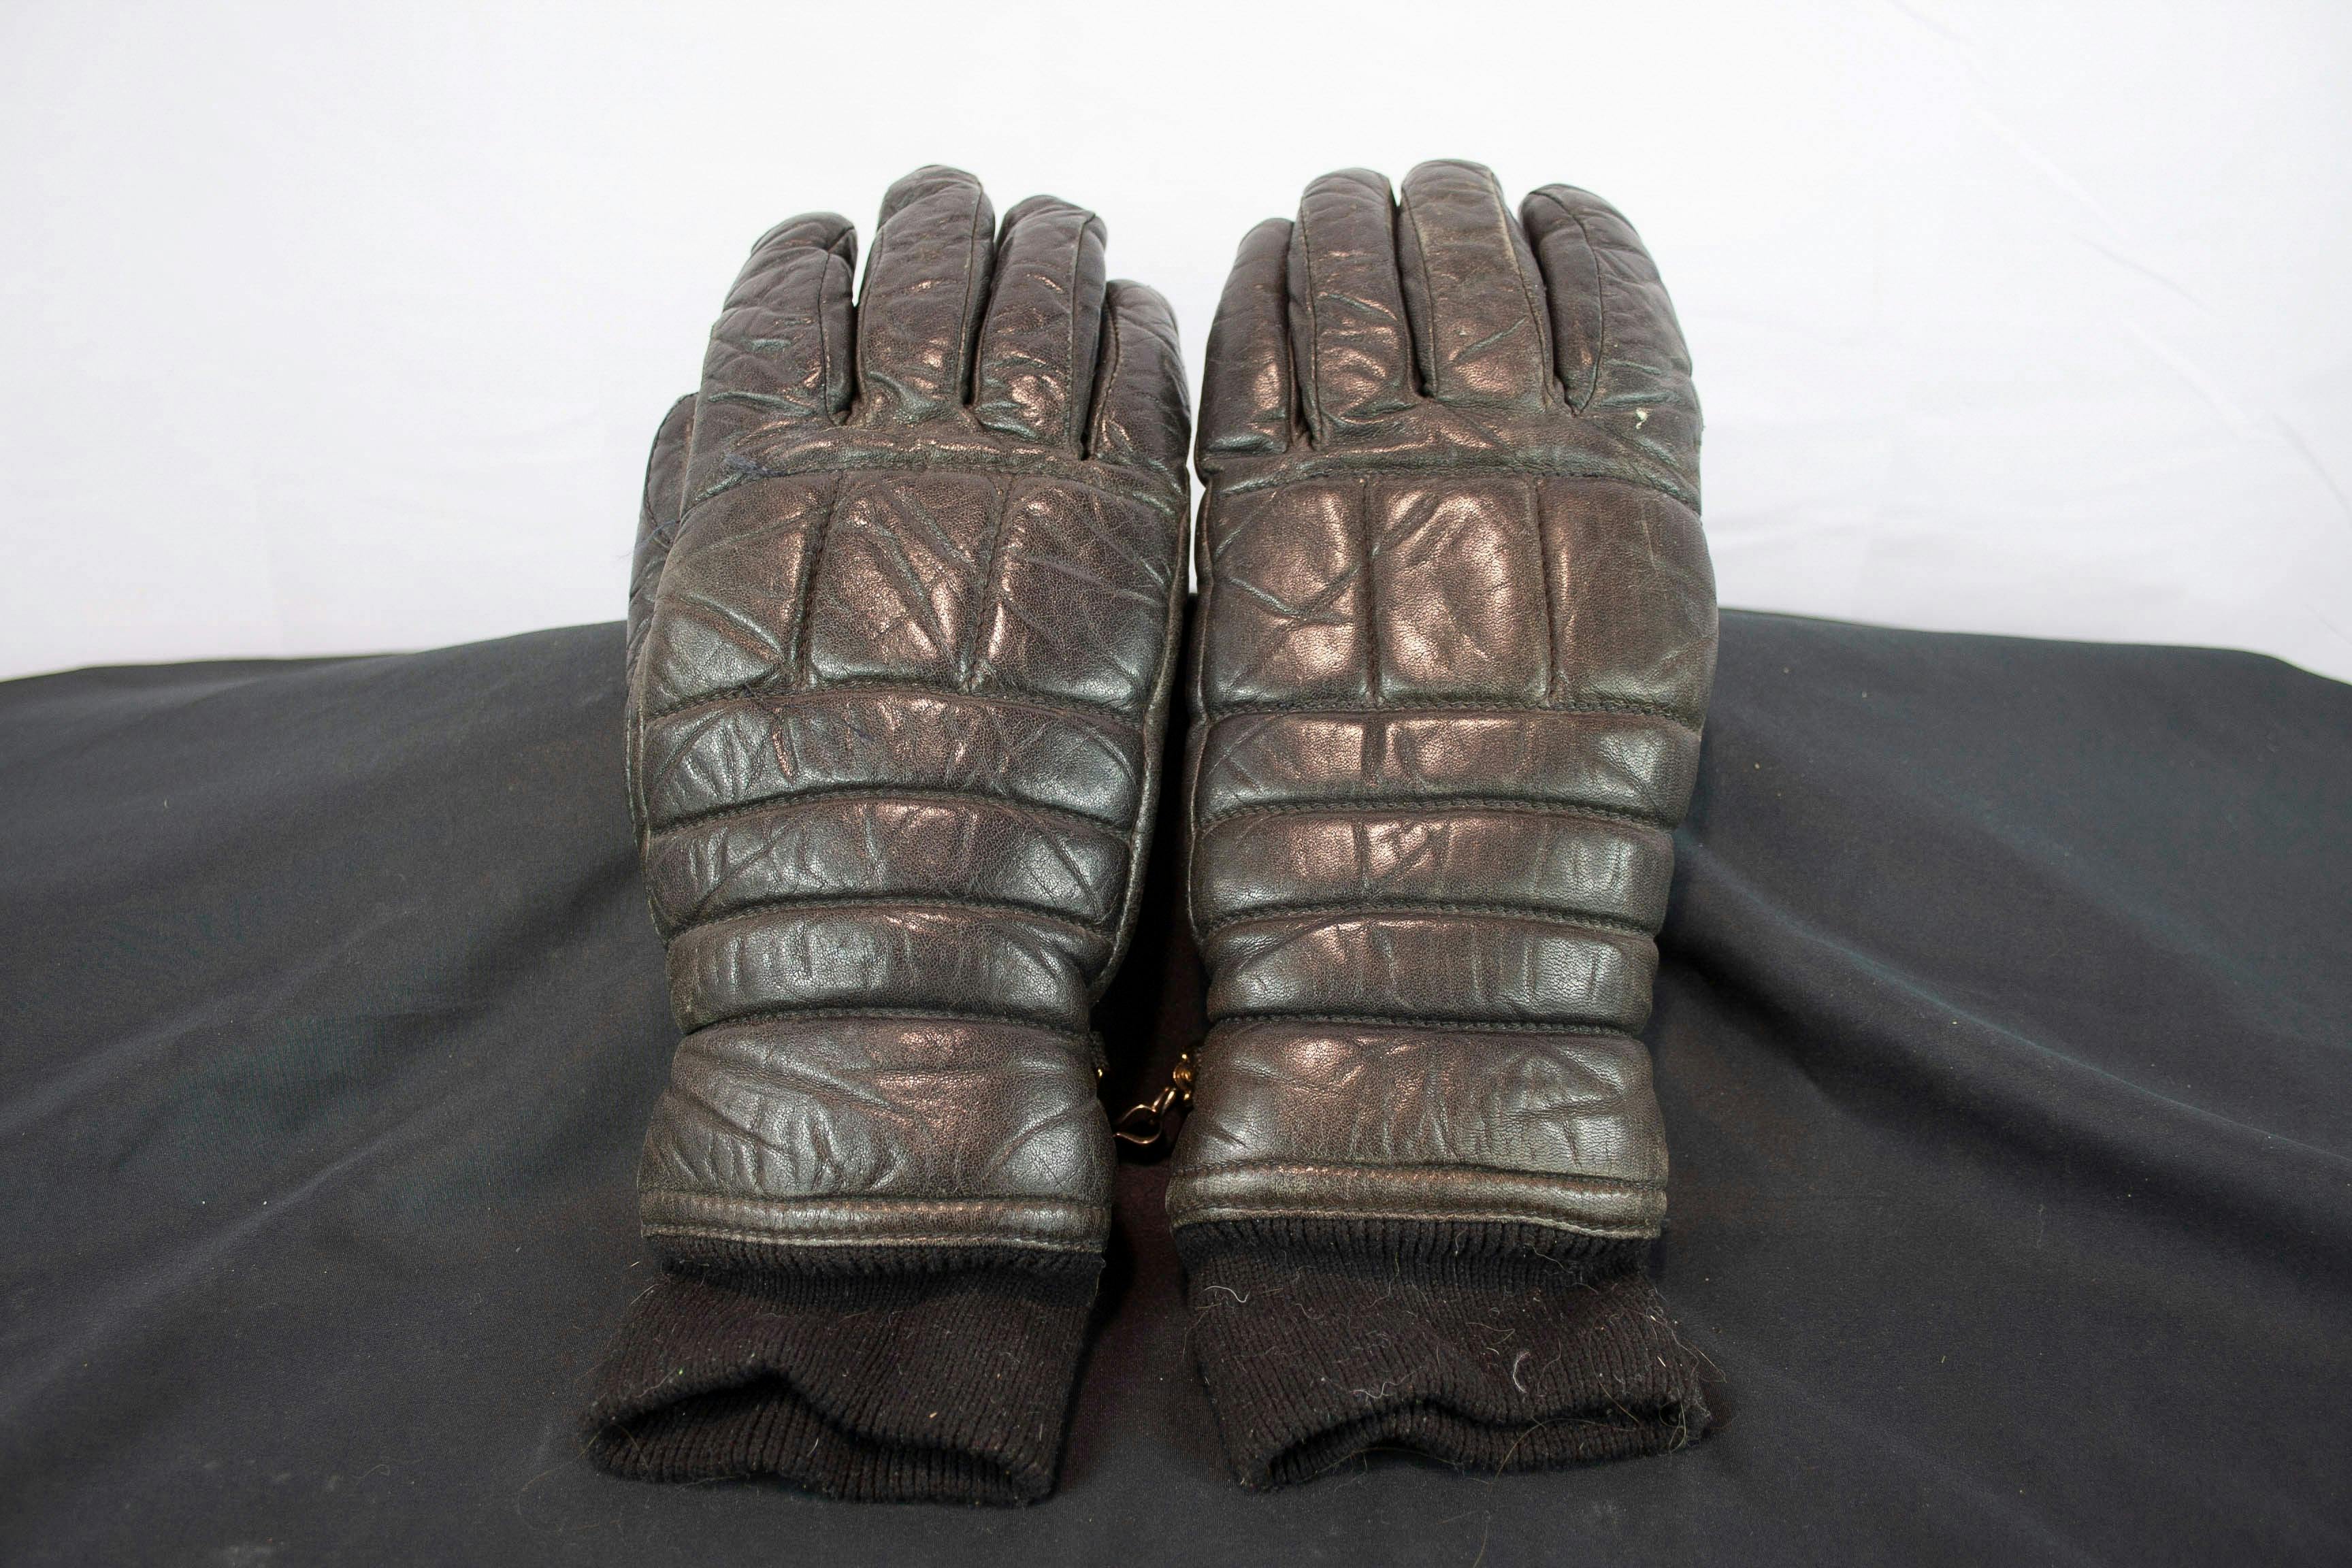 Grandoe Insulated Leather Gloves - Women's Small/Medium